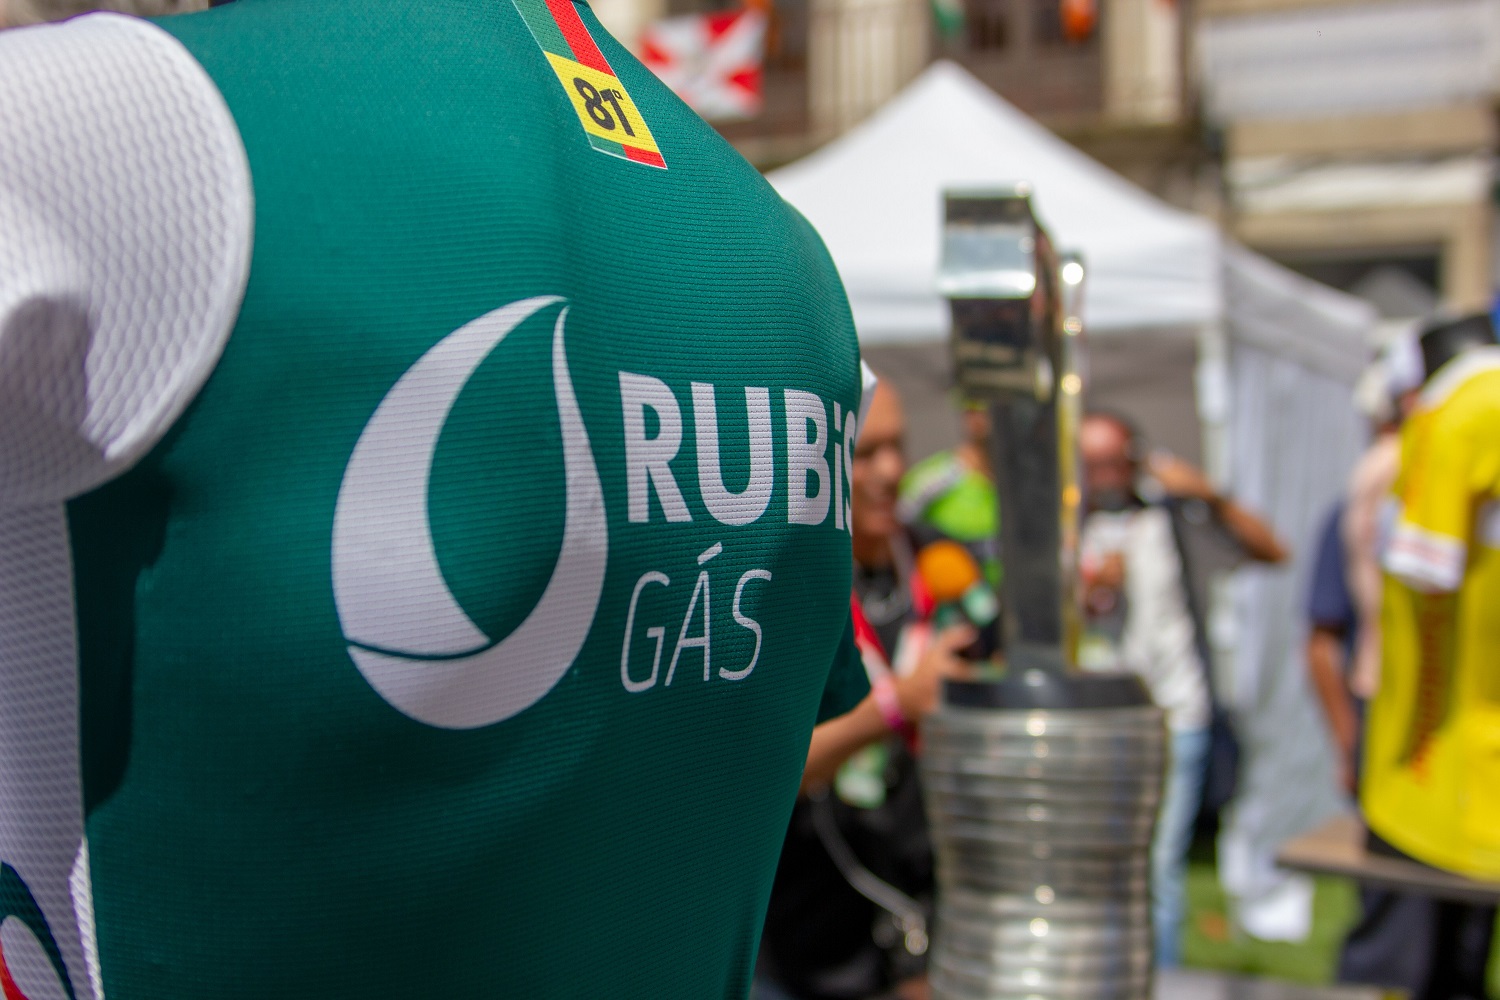 Rubis Gás patrocina novamente a Camisola Verde da Volta a Portugal